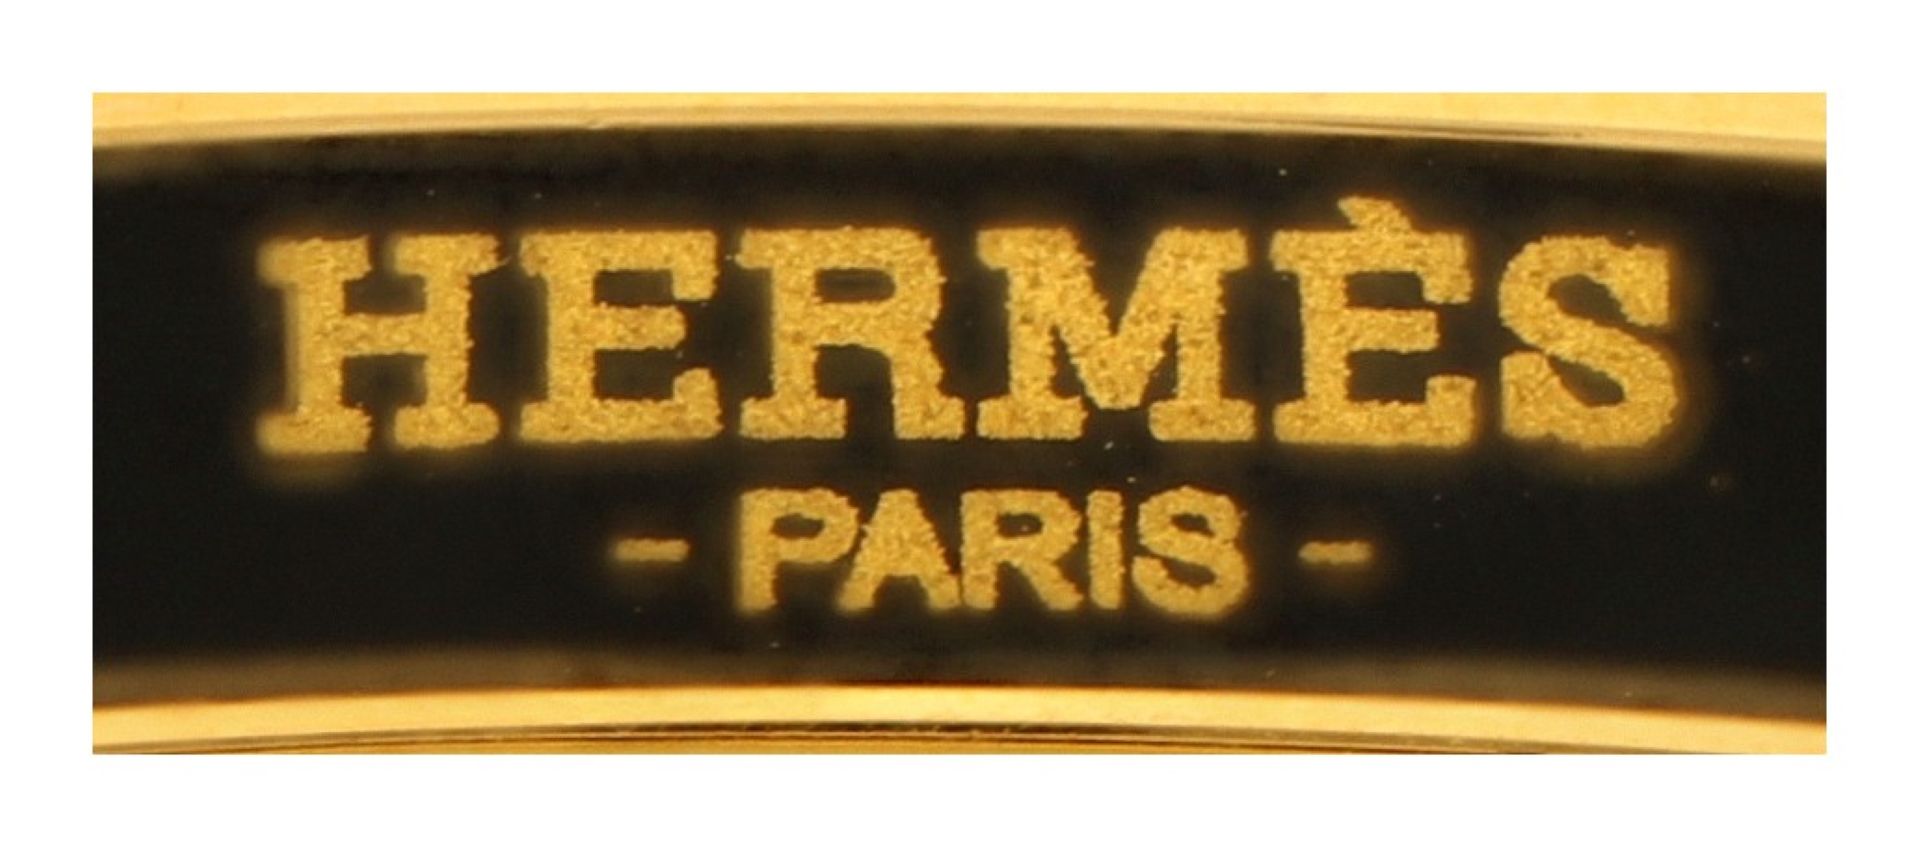 No Reserve - Hermès steel bangle bracelet with white enamel. - Image 5 of 6